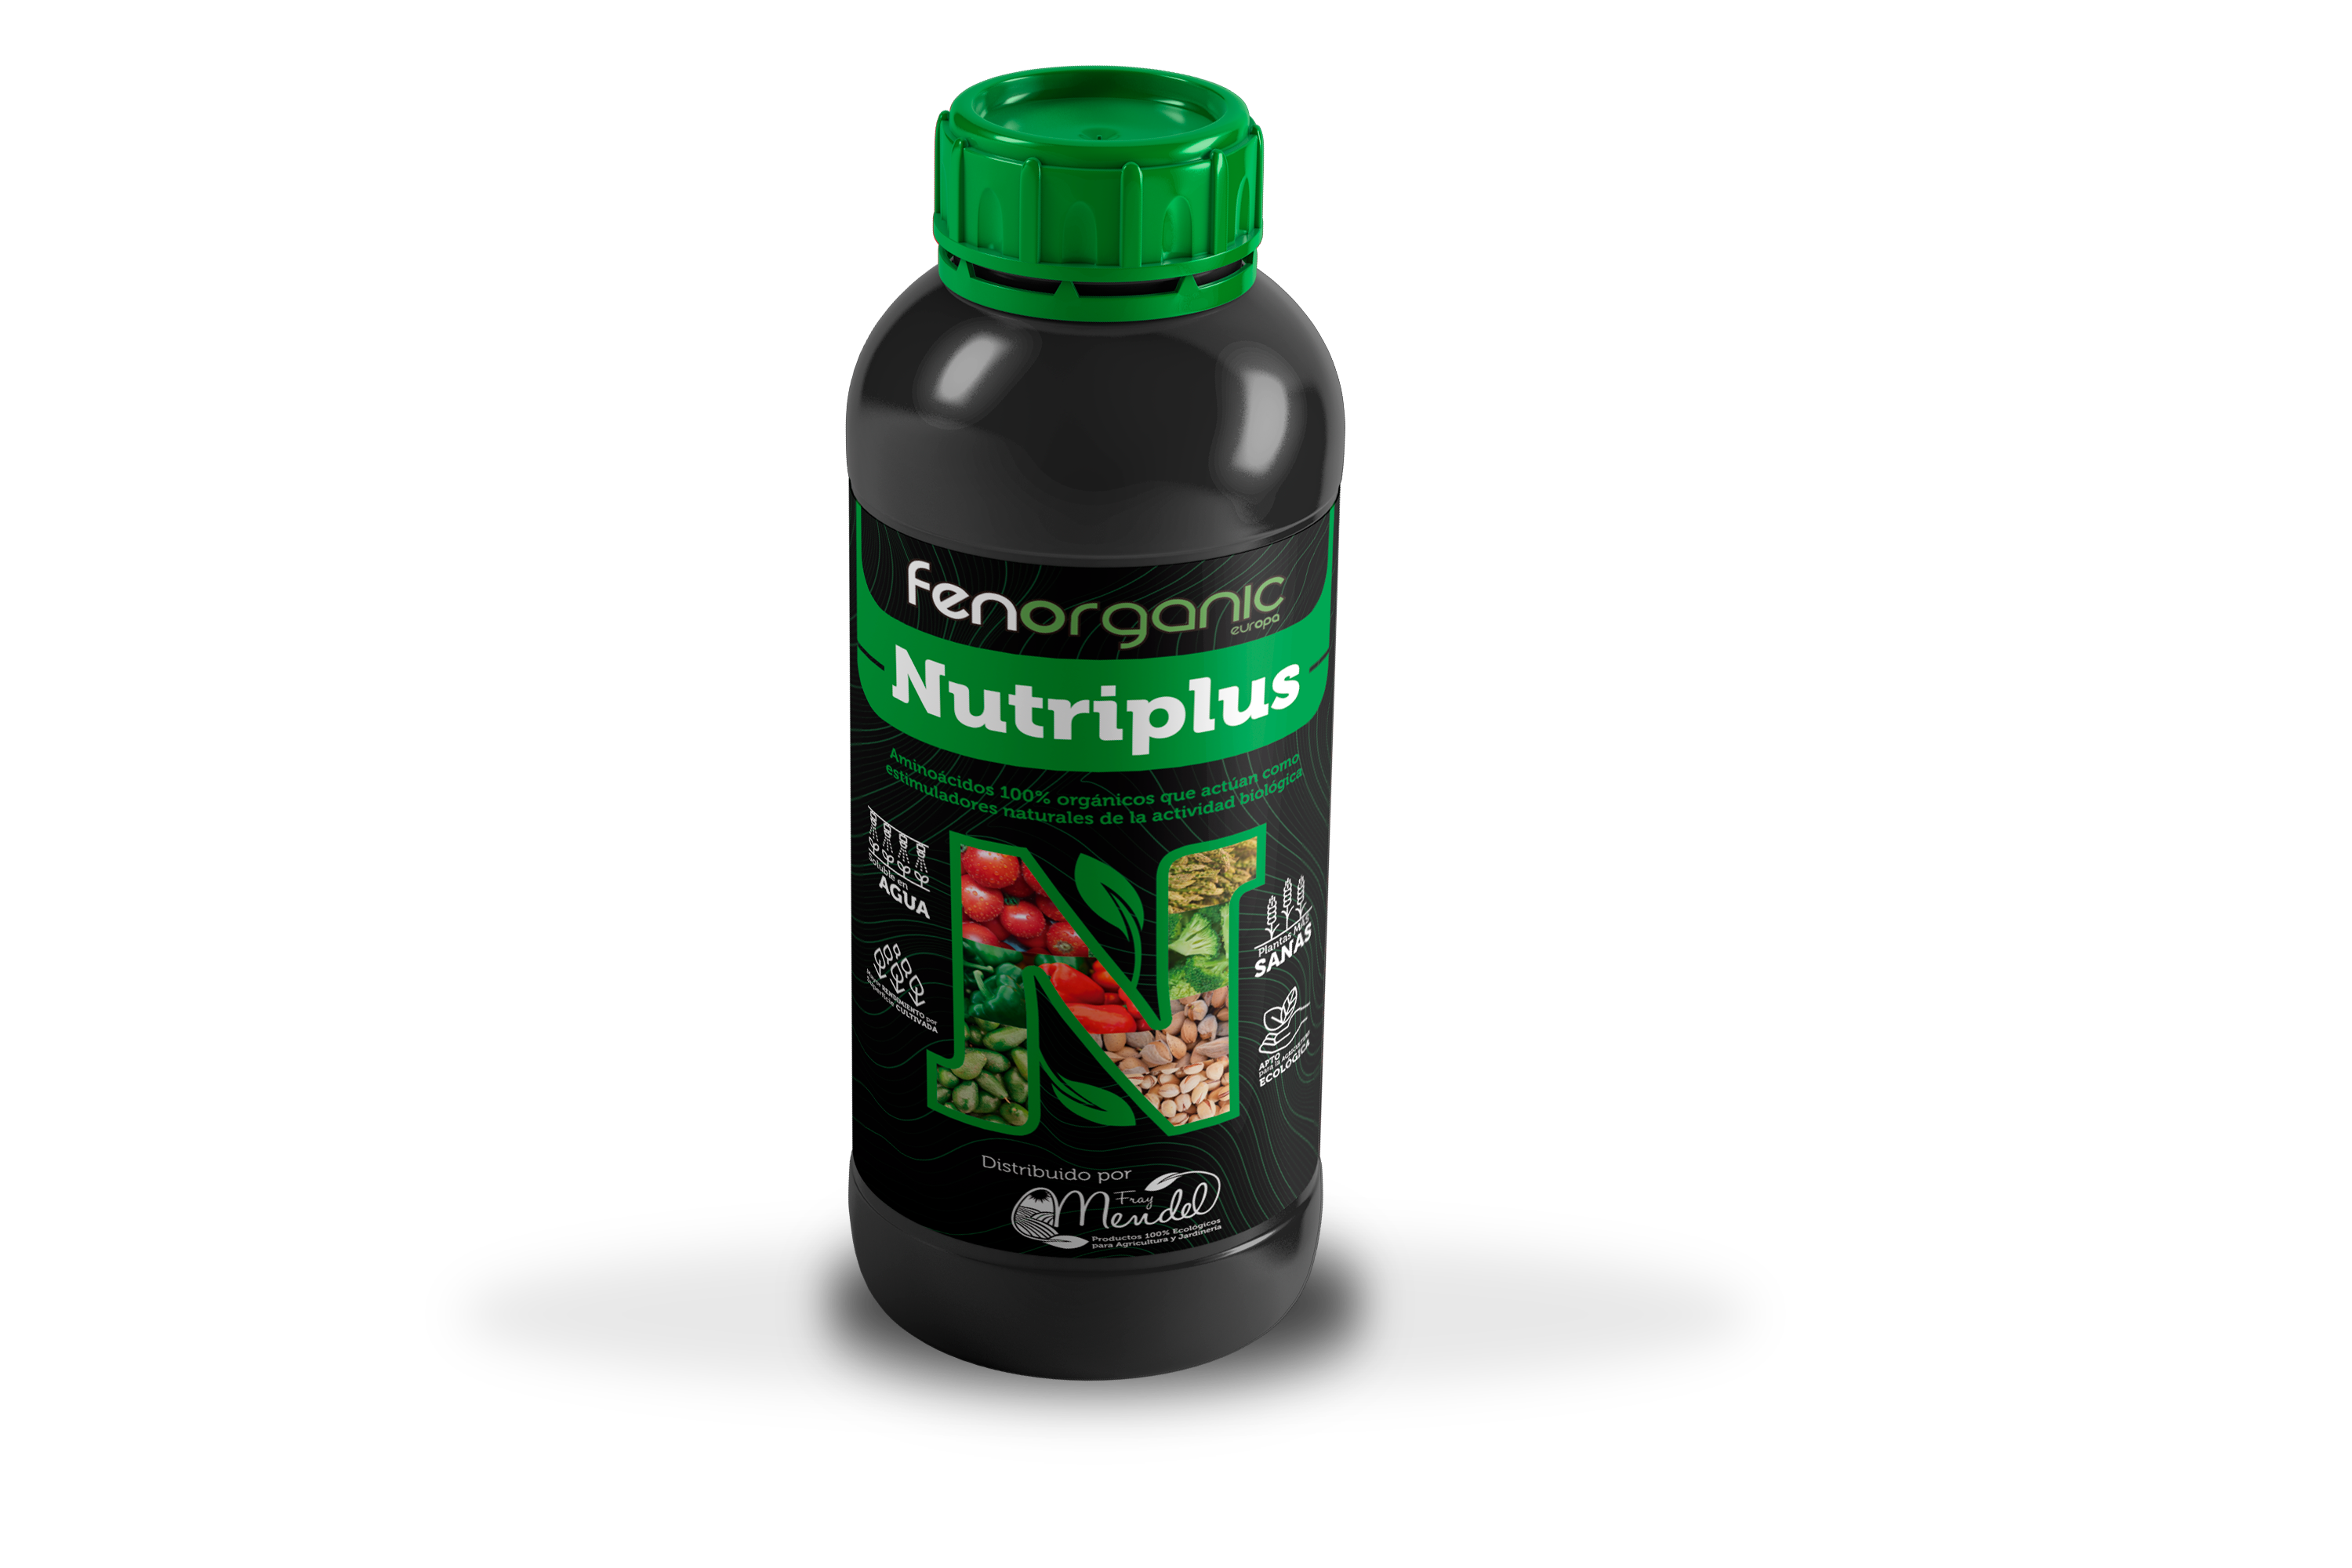 Nutriplus N10 - Fertilizante líquido ecológico